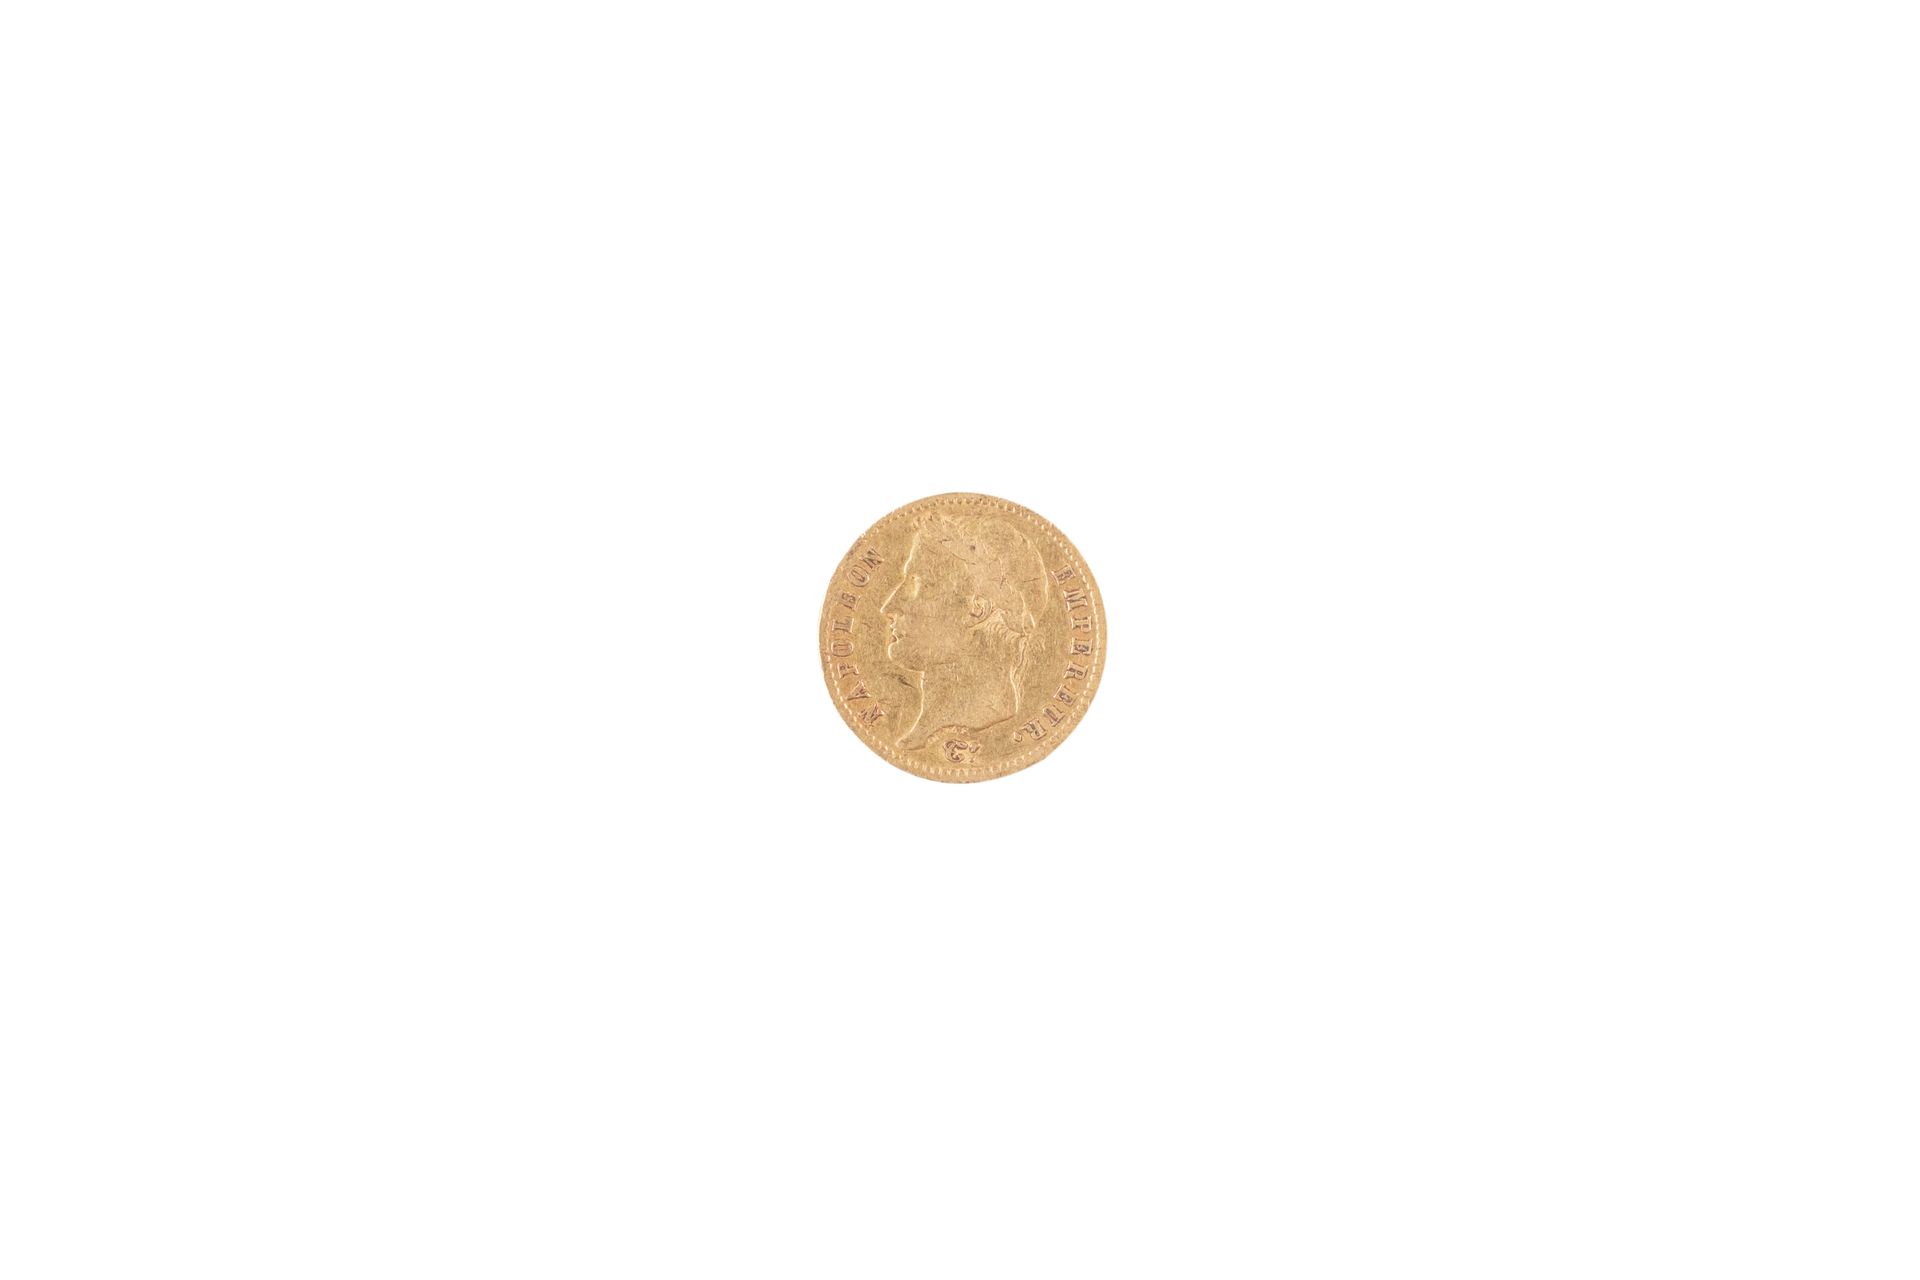 Null 20 francs gold 1810 A Paris, 6,38 gr. G. 1025

TTB